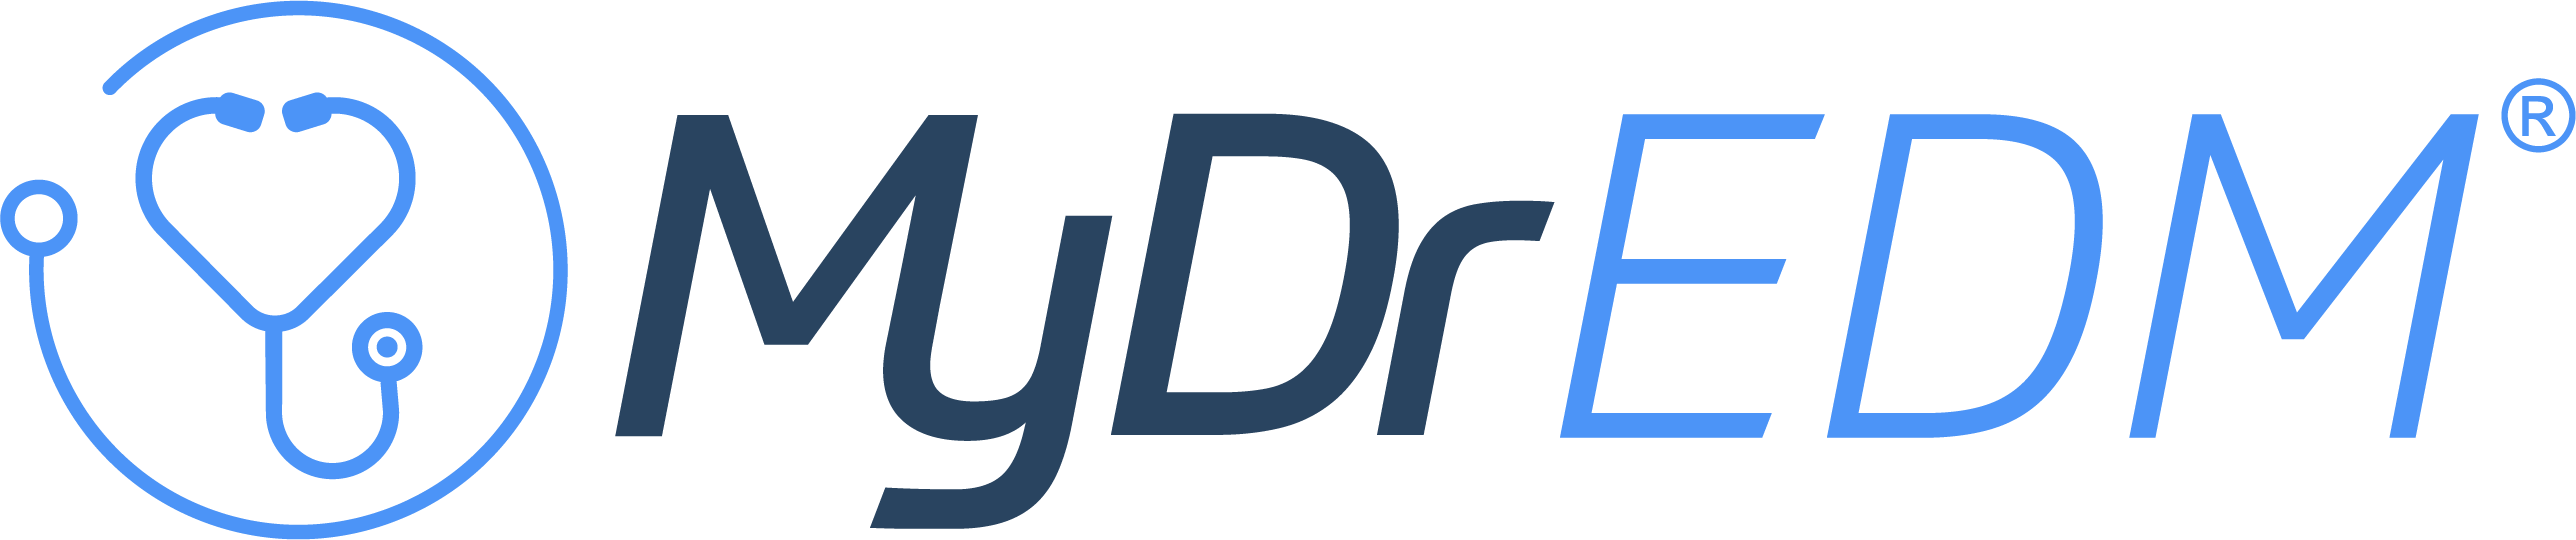 mydr EDM logo